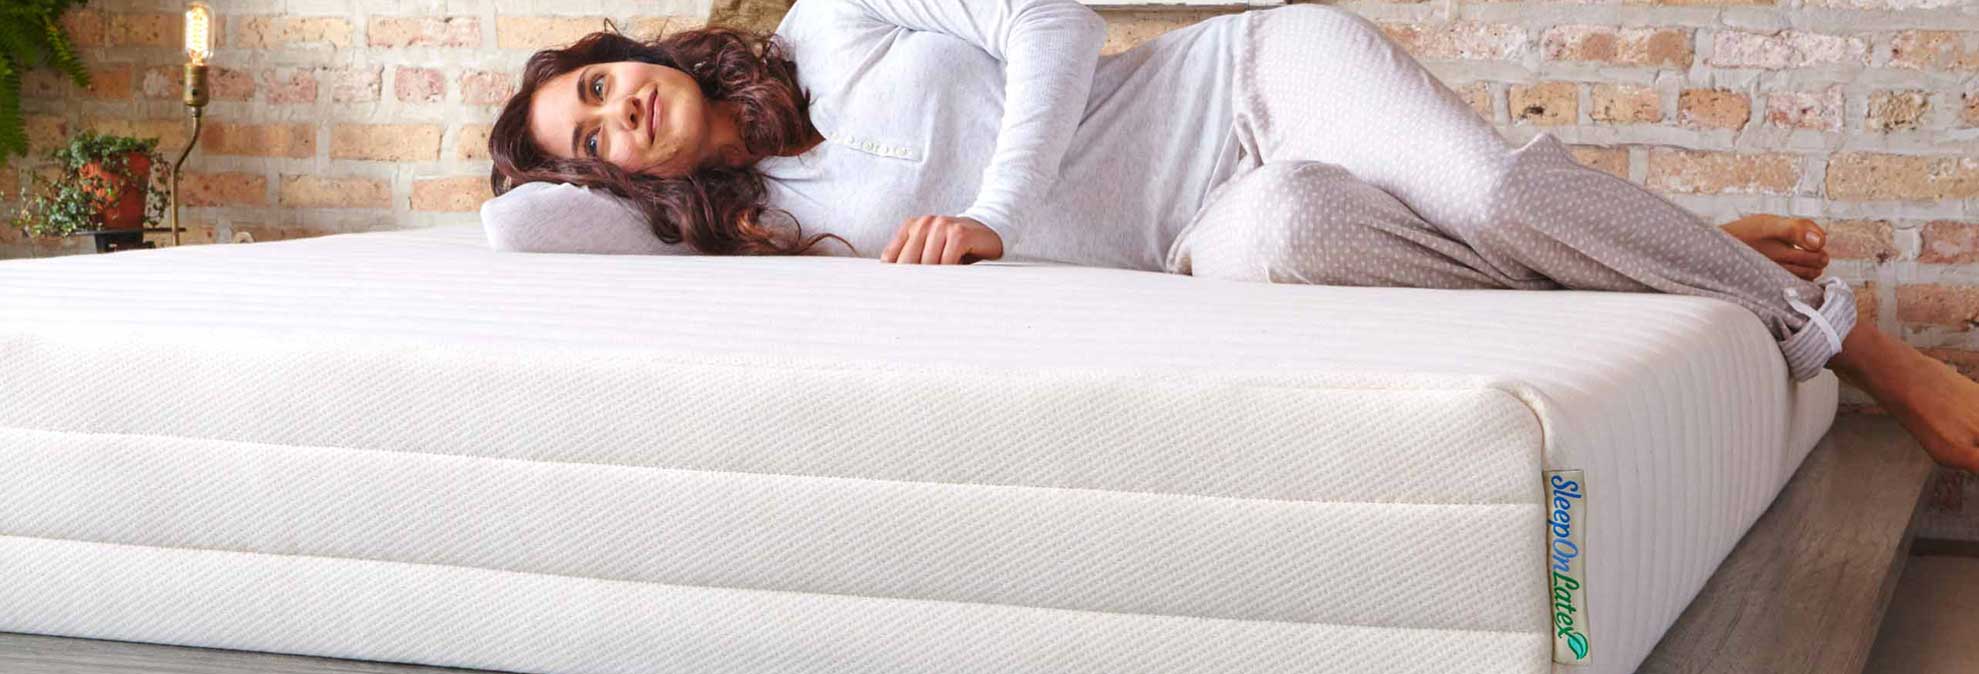 best mattress for overweight man consumer reports